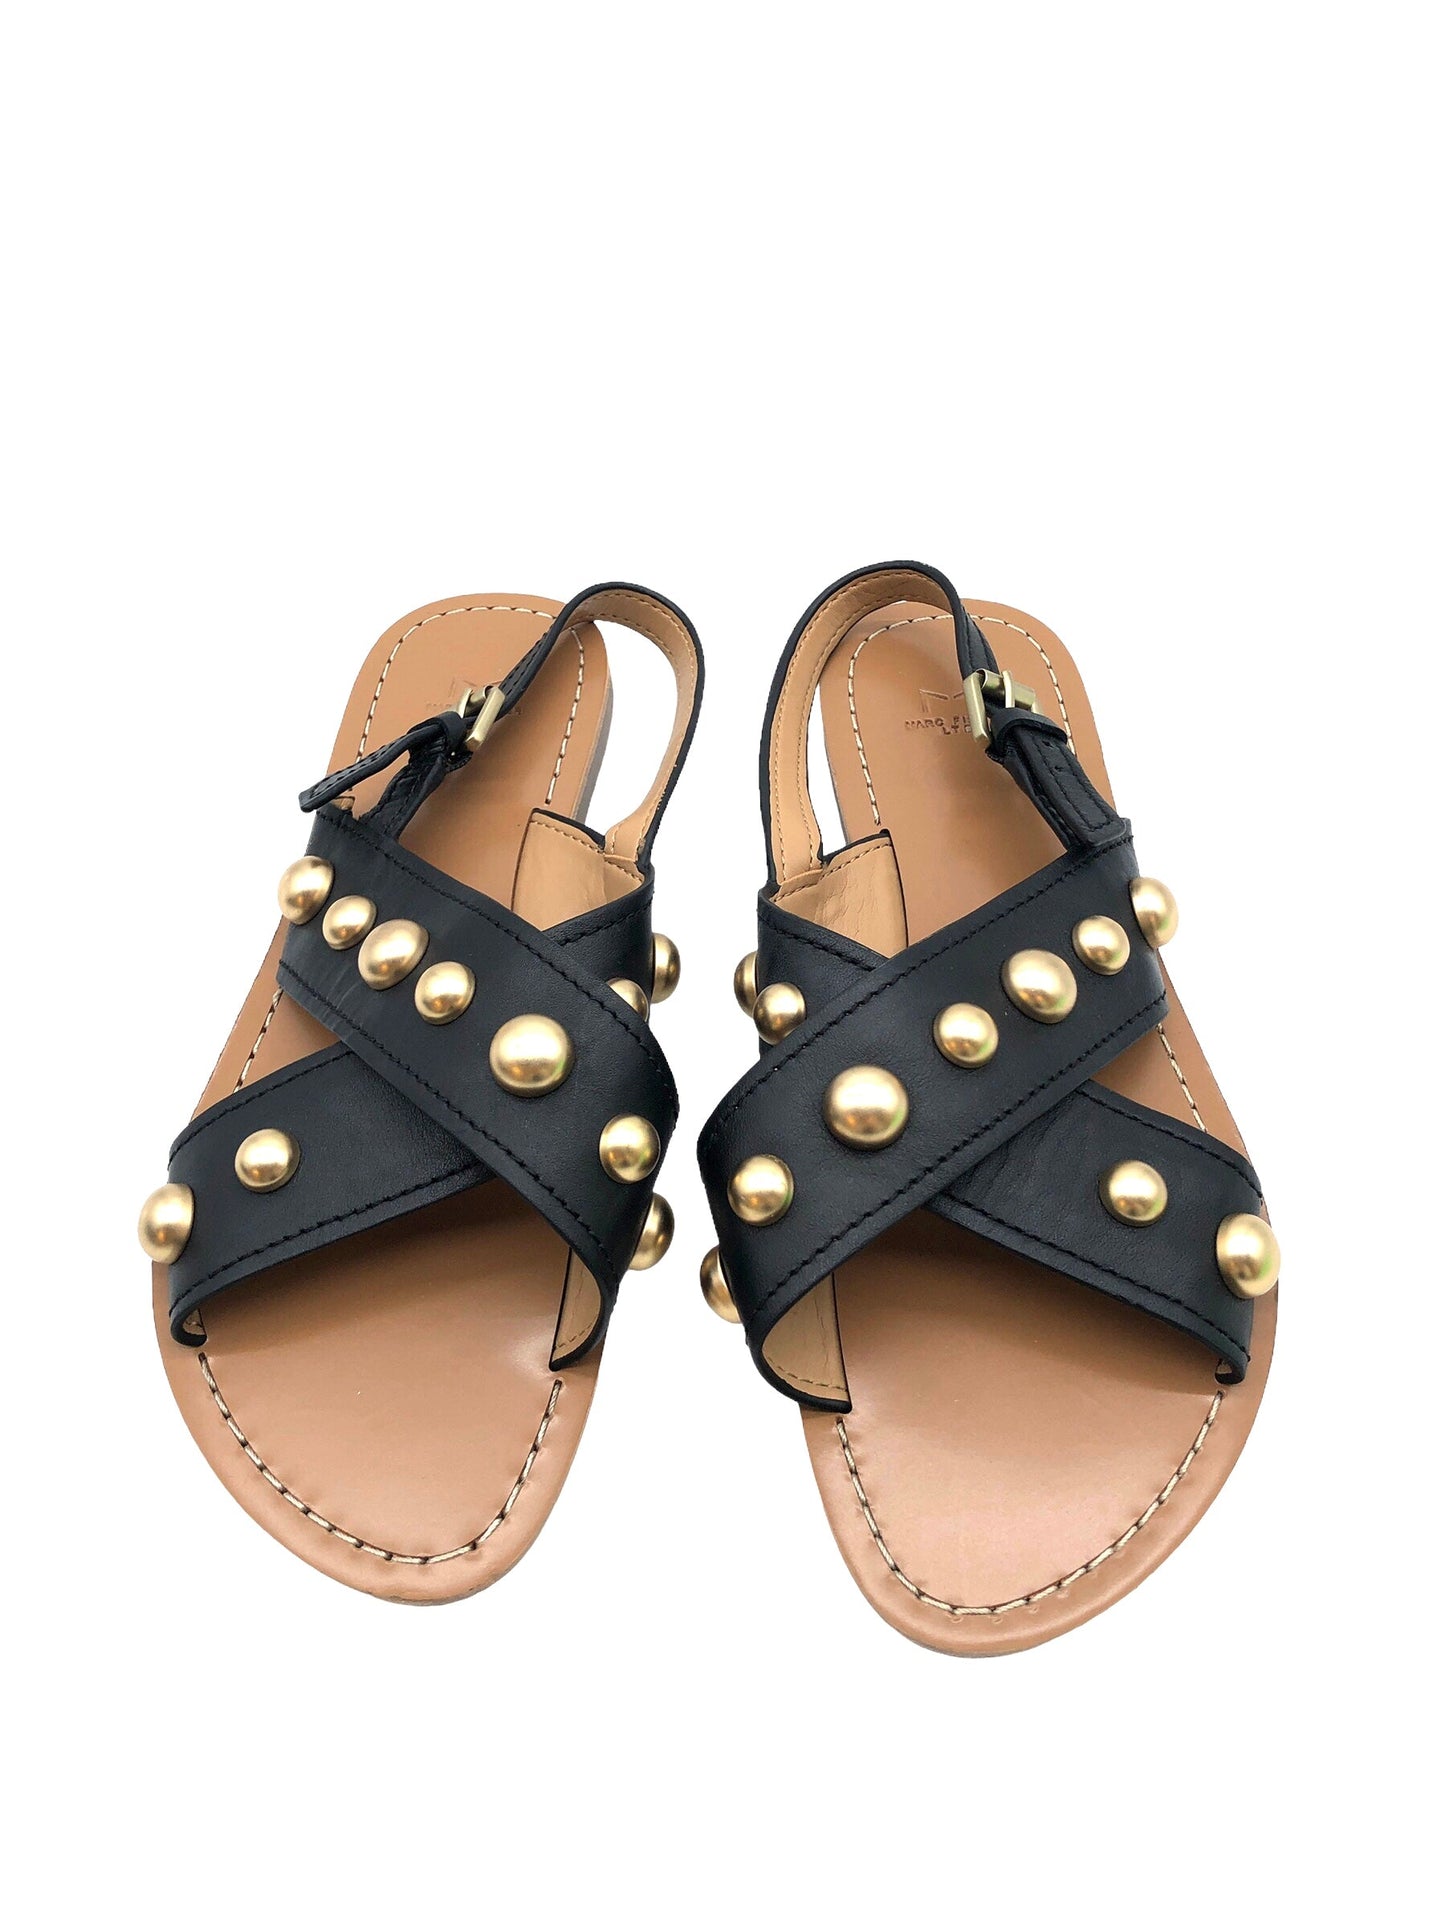 Black & Gold Sandals Flats Marc Fisher, Size 7